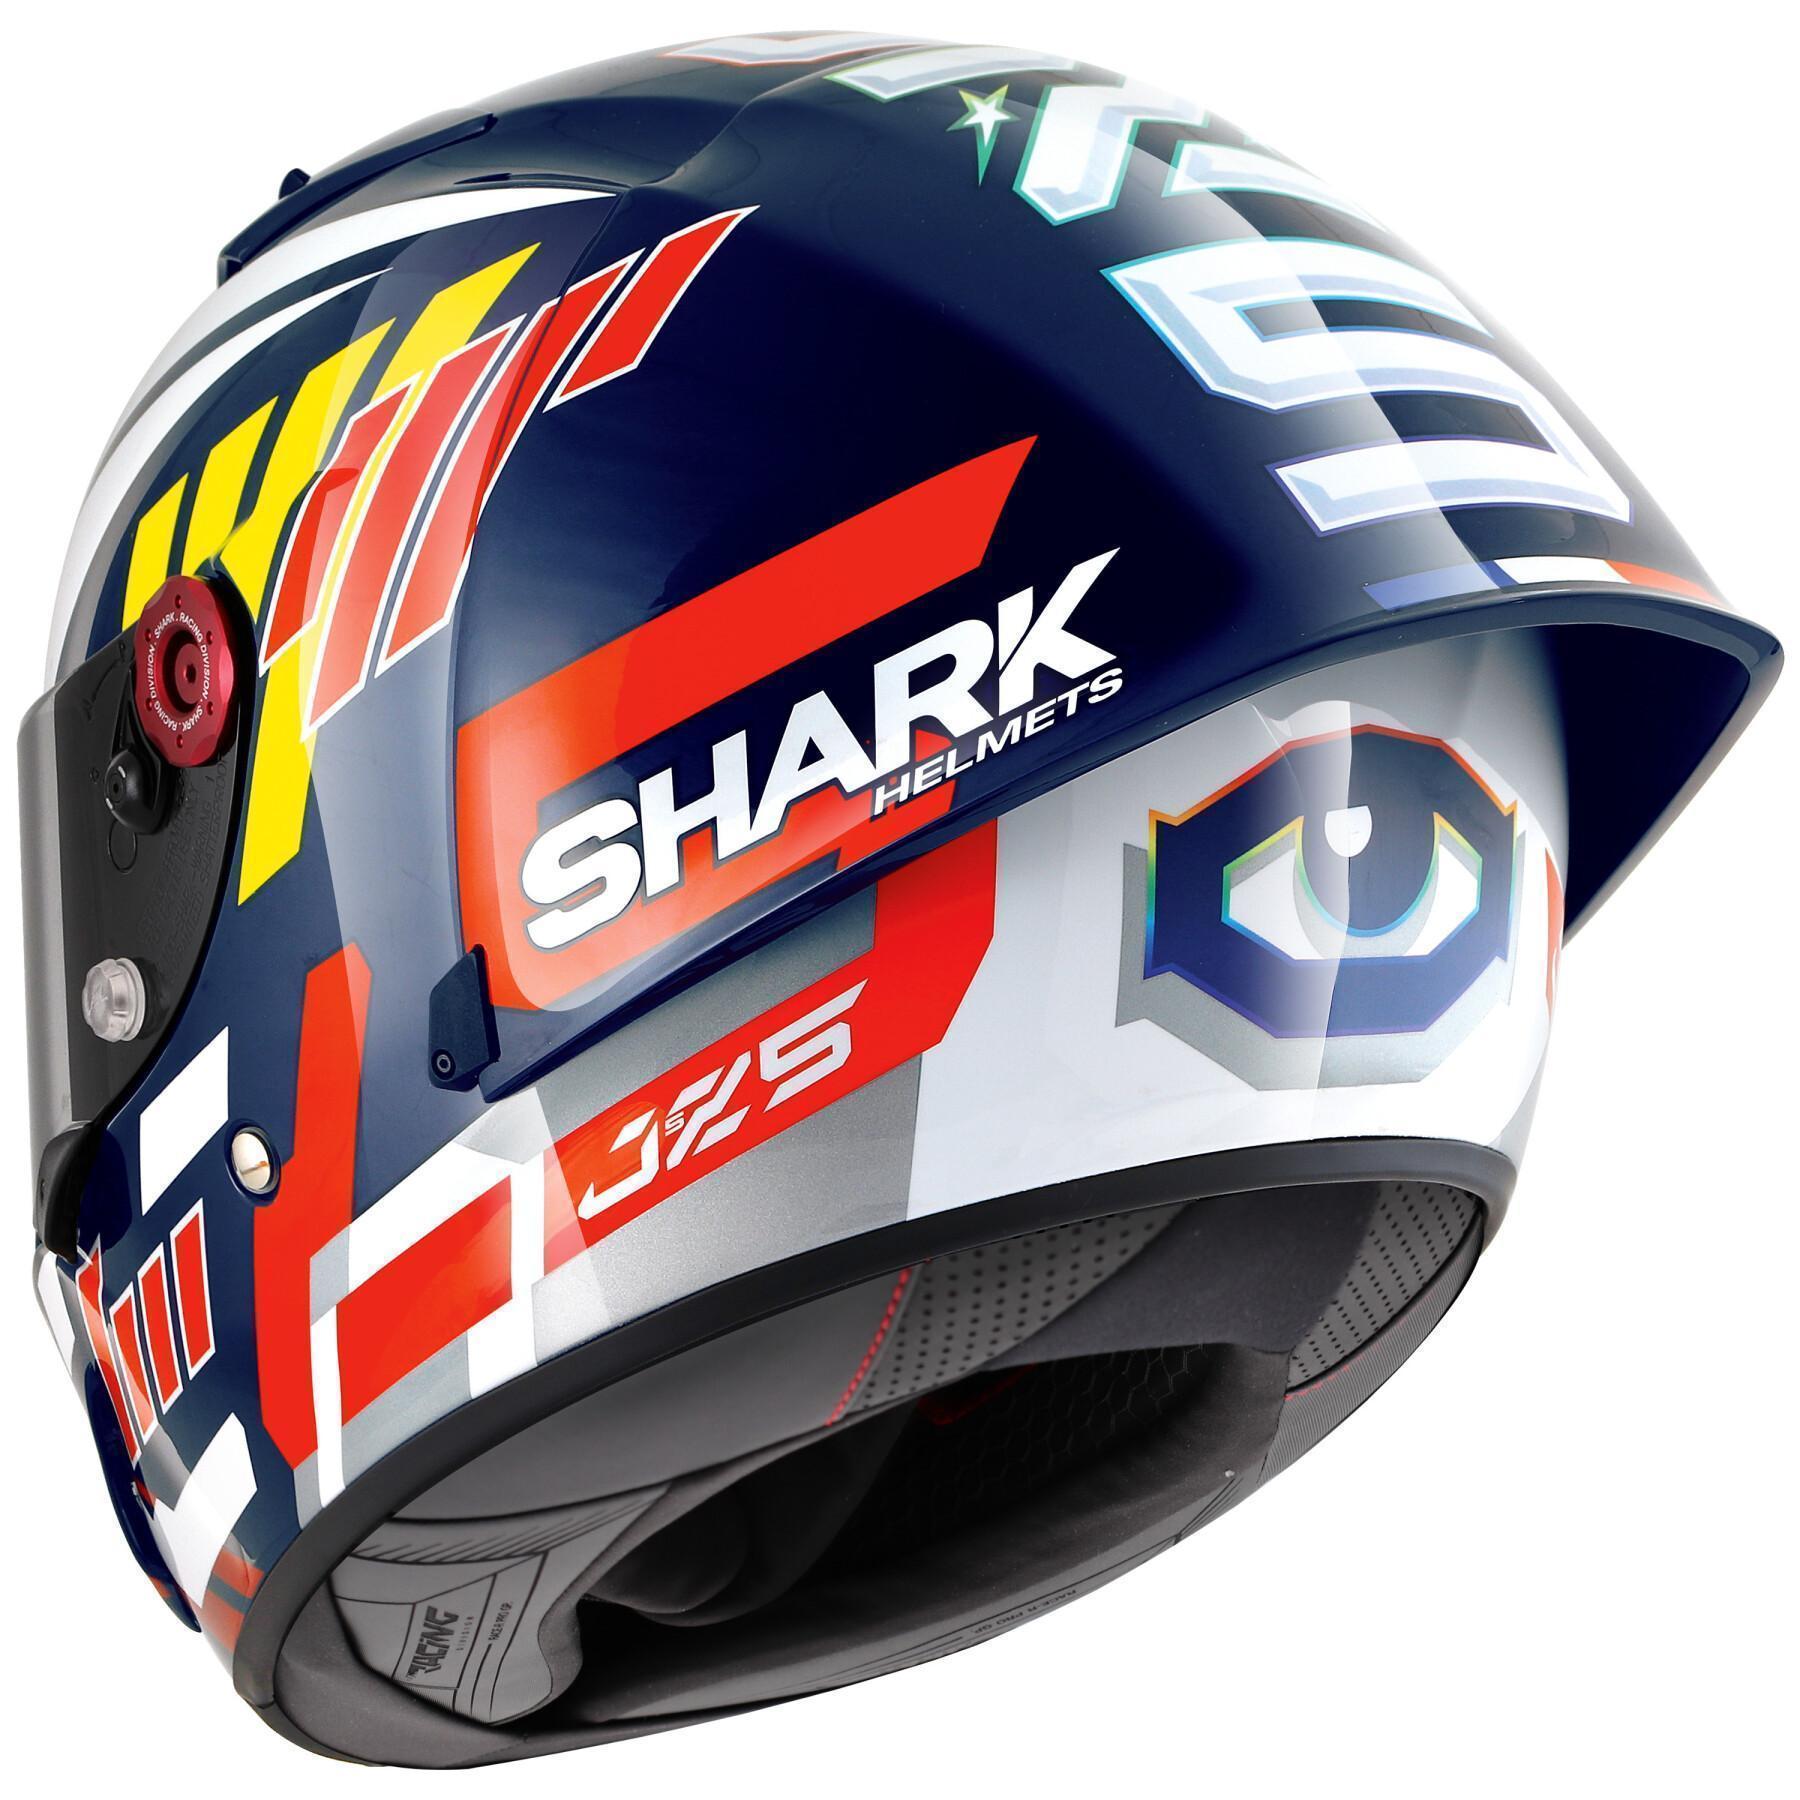 Casco integrale da moto Shark race-r pro GP zarco signature